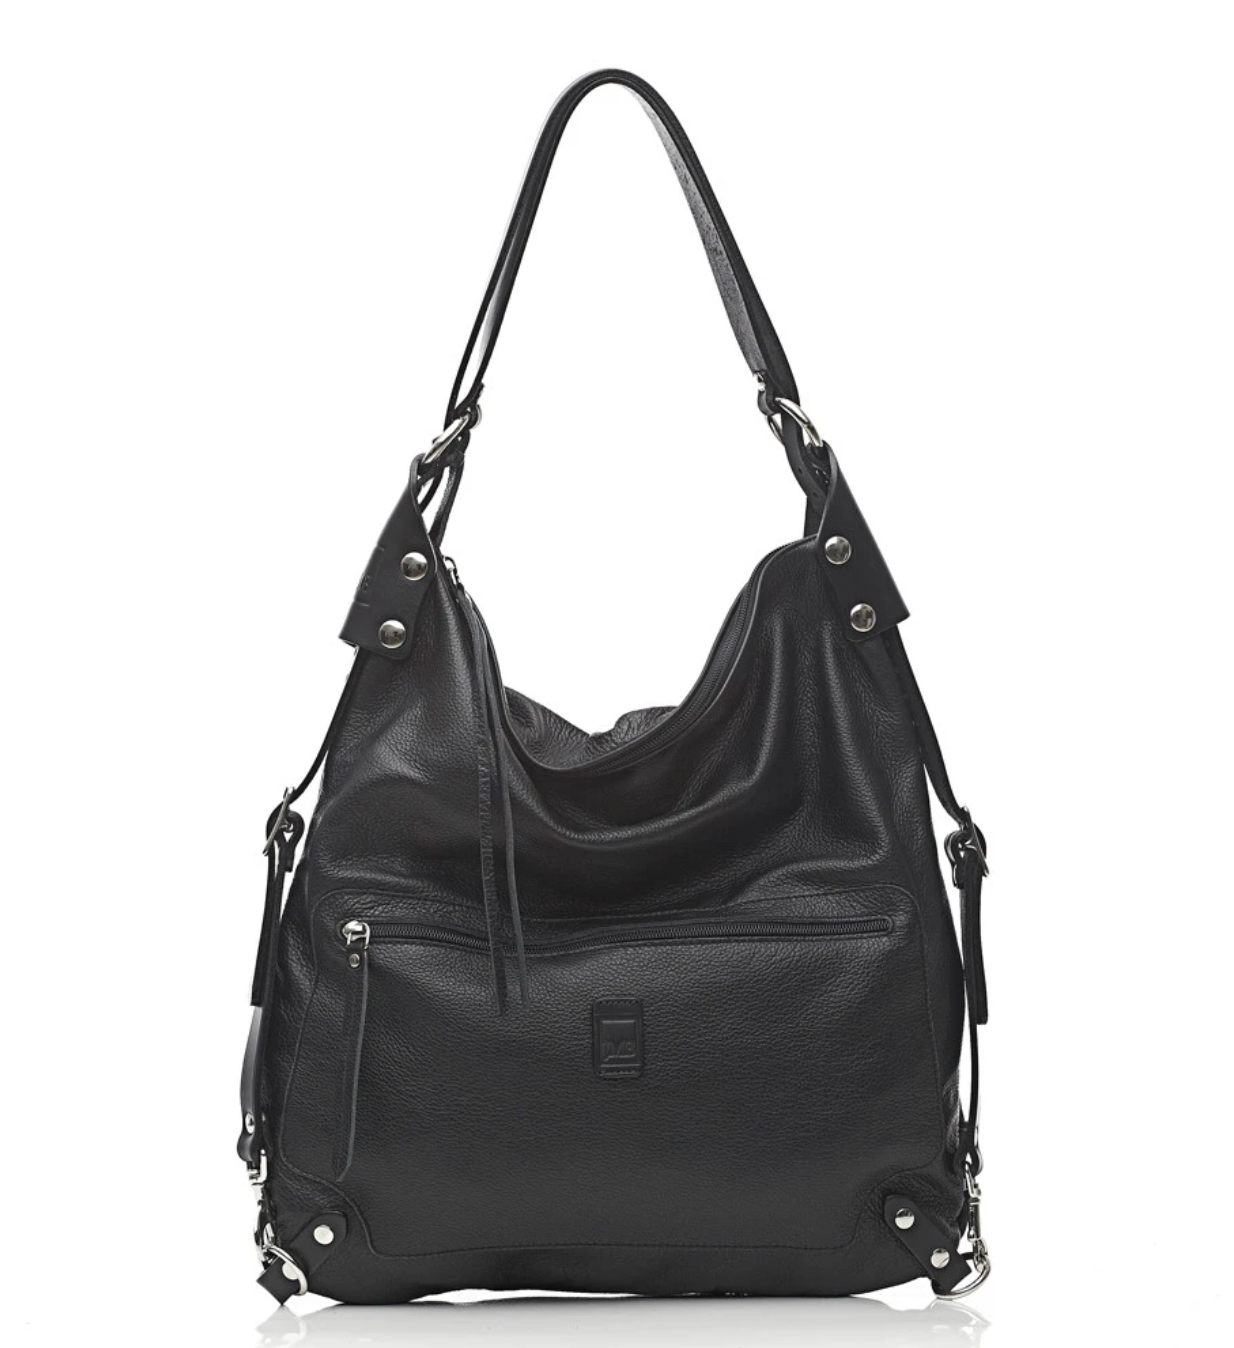 Transformable Leather Bag "Villa Sak" Black